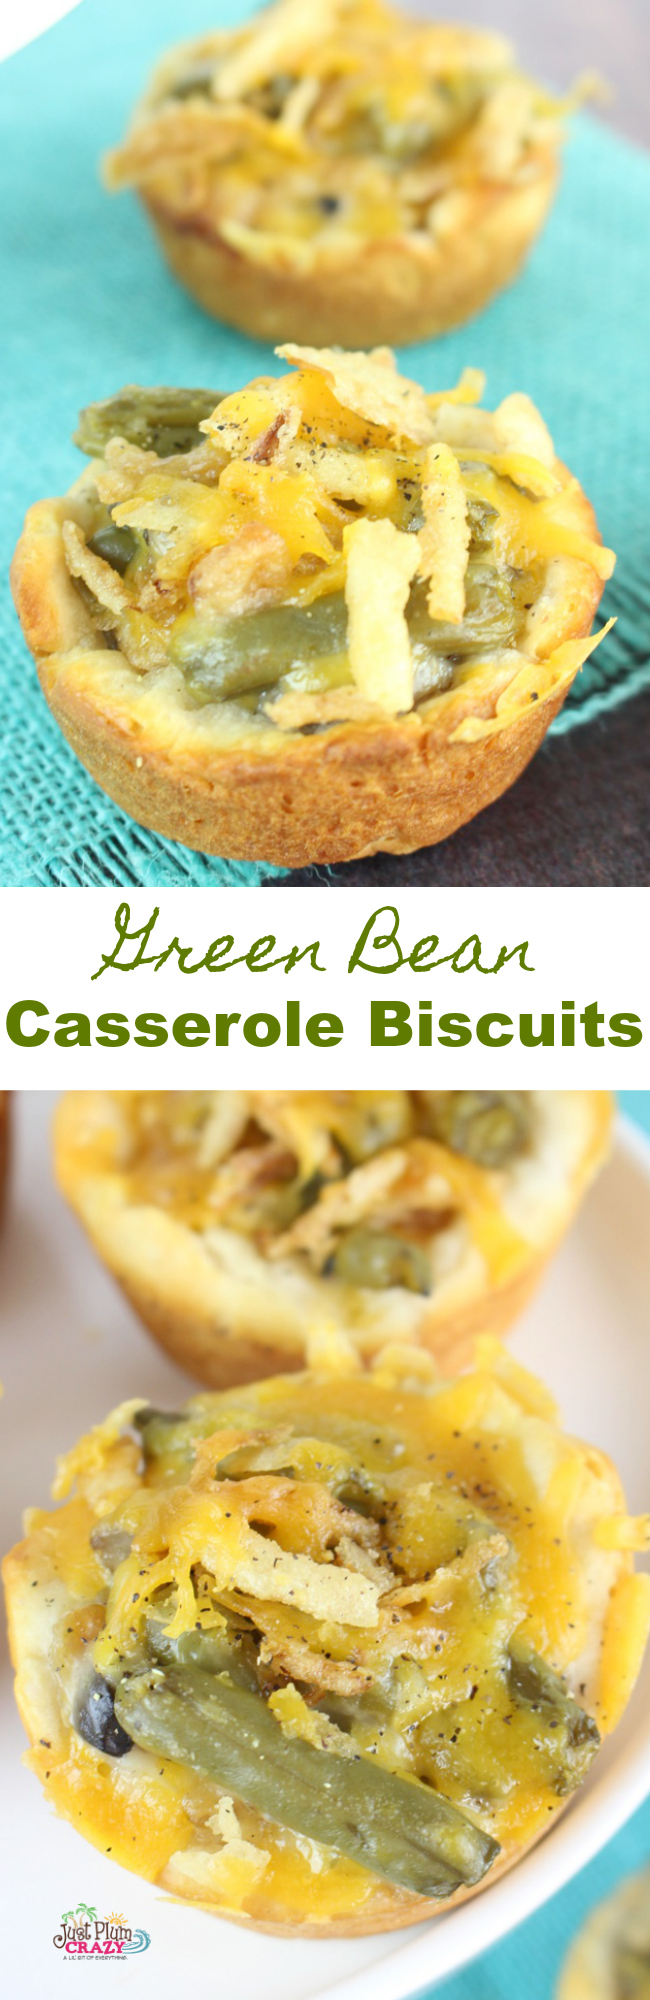 Recipe for green bean casserole in a muffin cup.